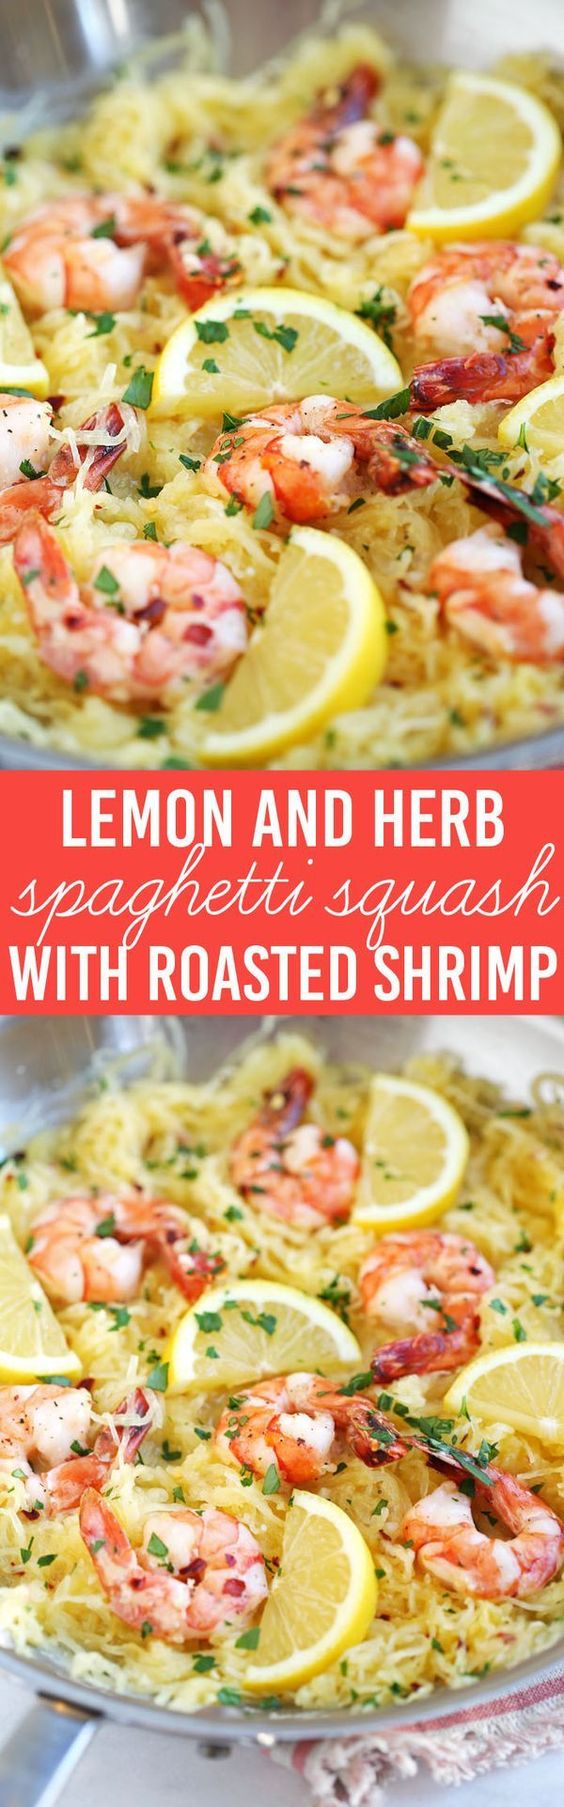 Lemon and Herb Spaghetti Squash with Roasted Shrimp